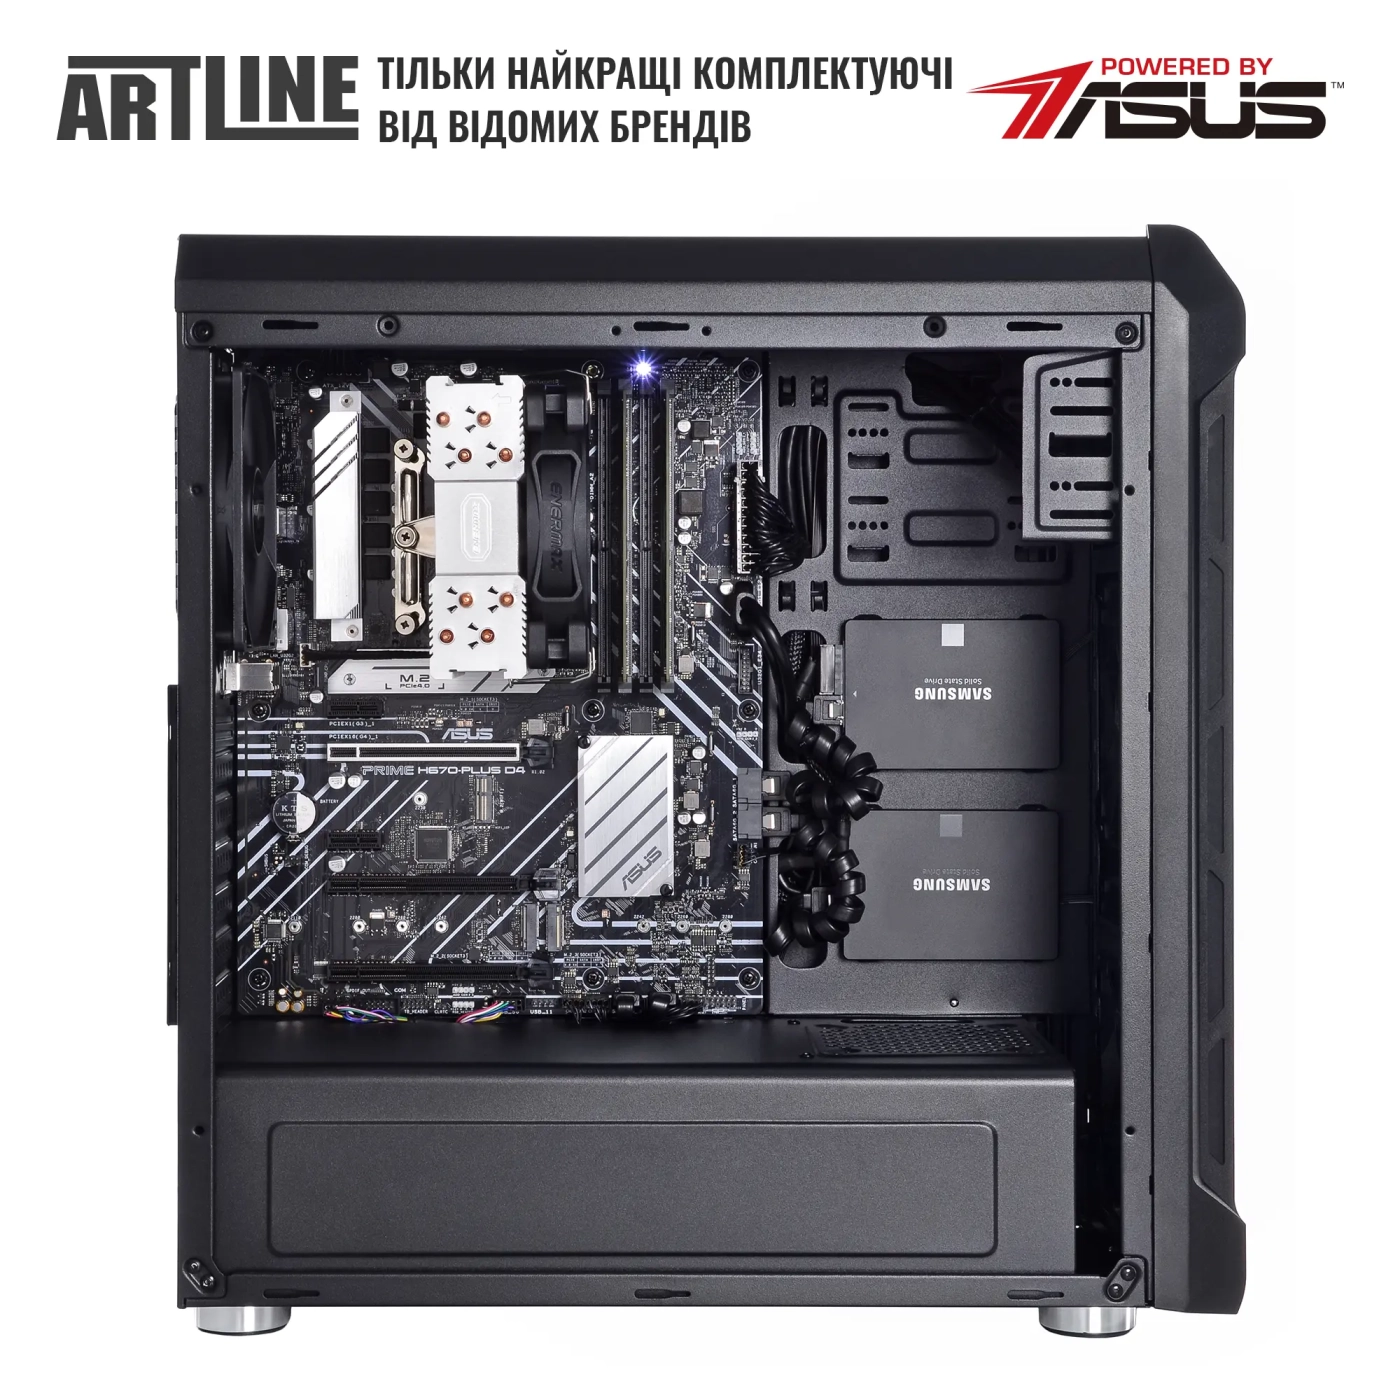 Купити Сервер ARTLINE Business T25 (T25v42) - фото 4